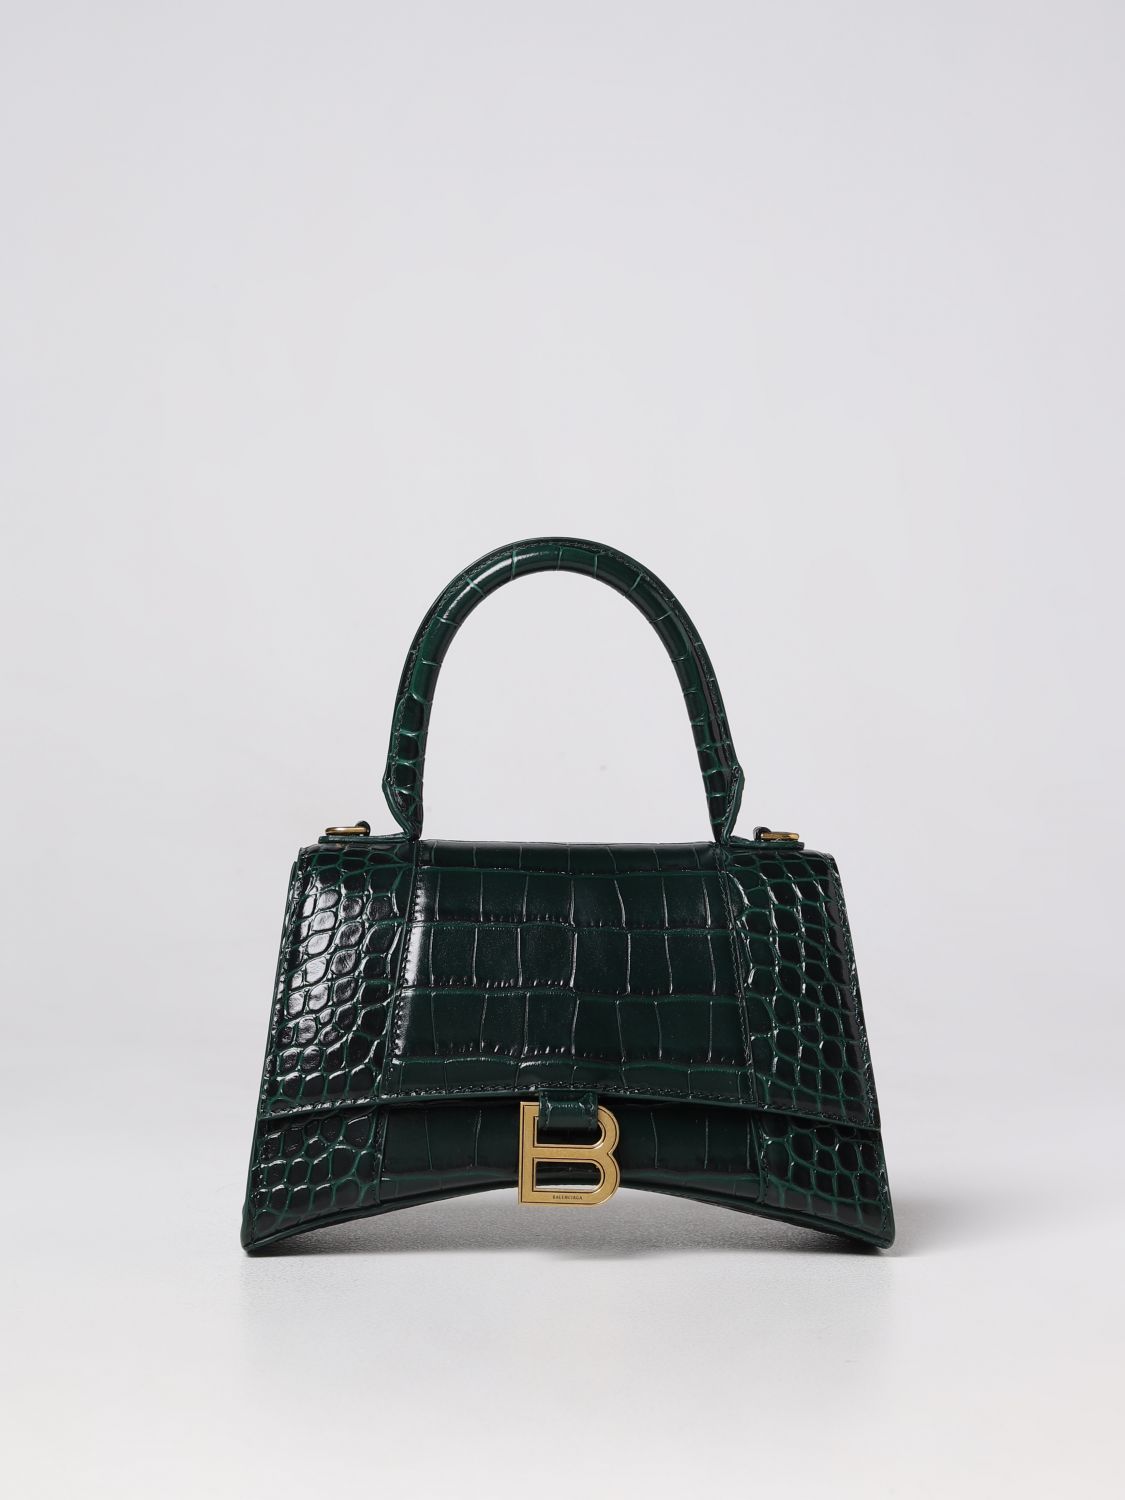 BALENCIAGA: Hourglass S bag - Green | Balenciaga handbag 5935461LRGM online at GIGLIO.COM